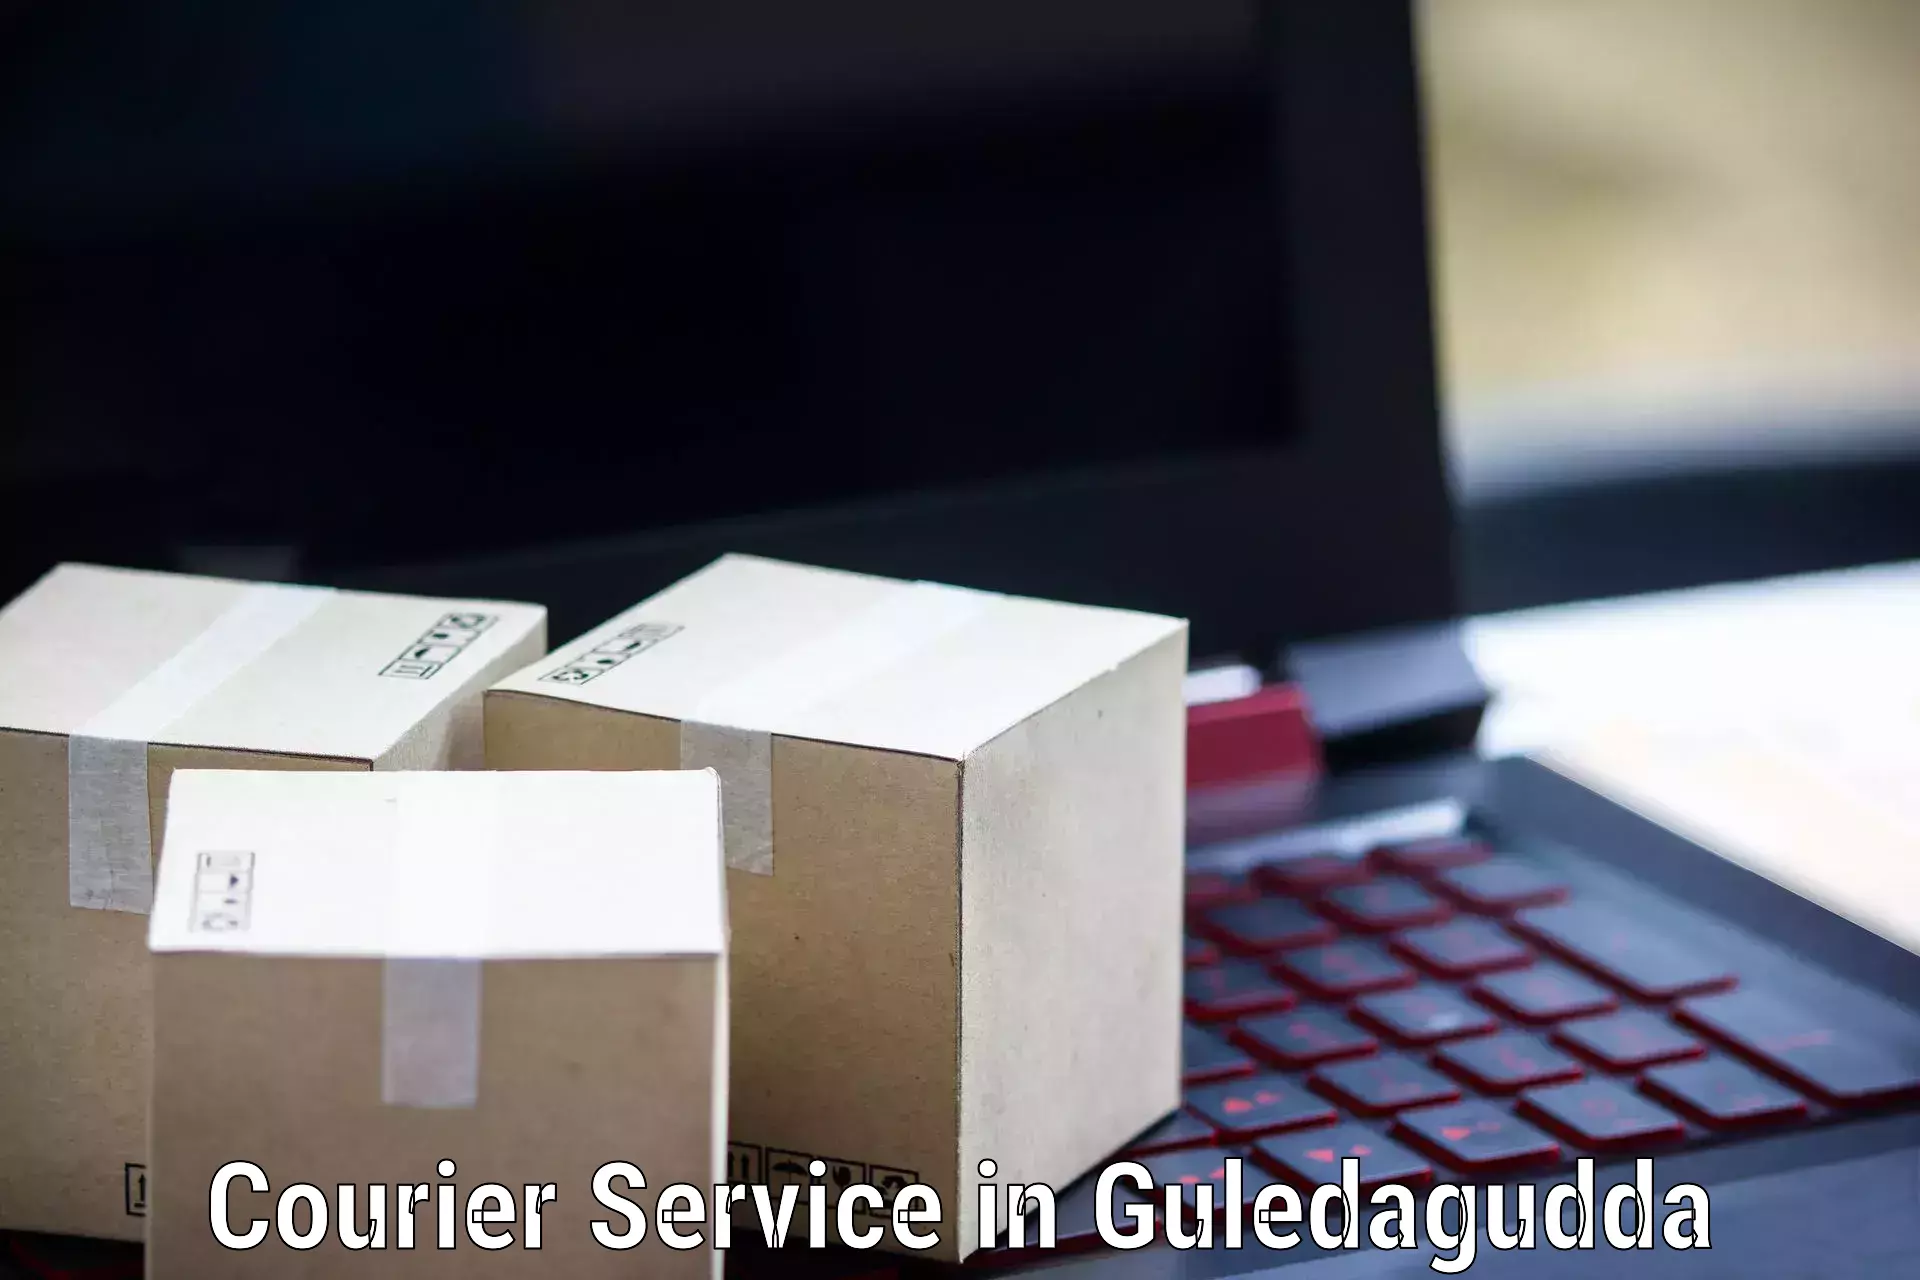 Affordable shipping rates in Guledagudda